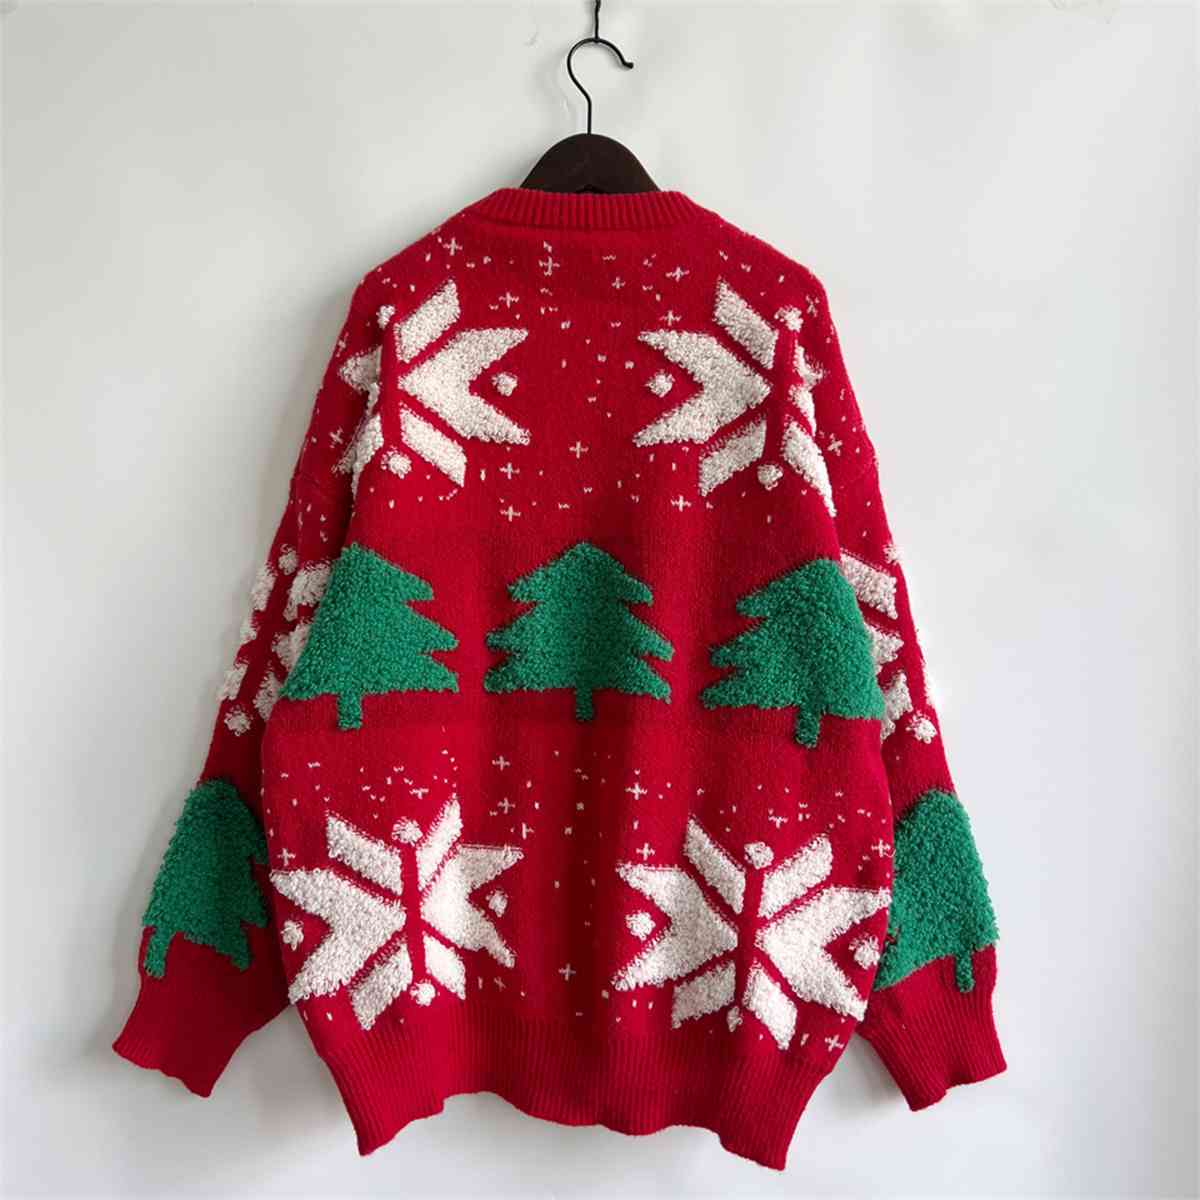 Snowflake Round Neck Long Sleeve Sweater